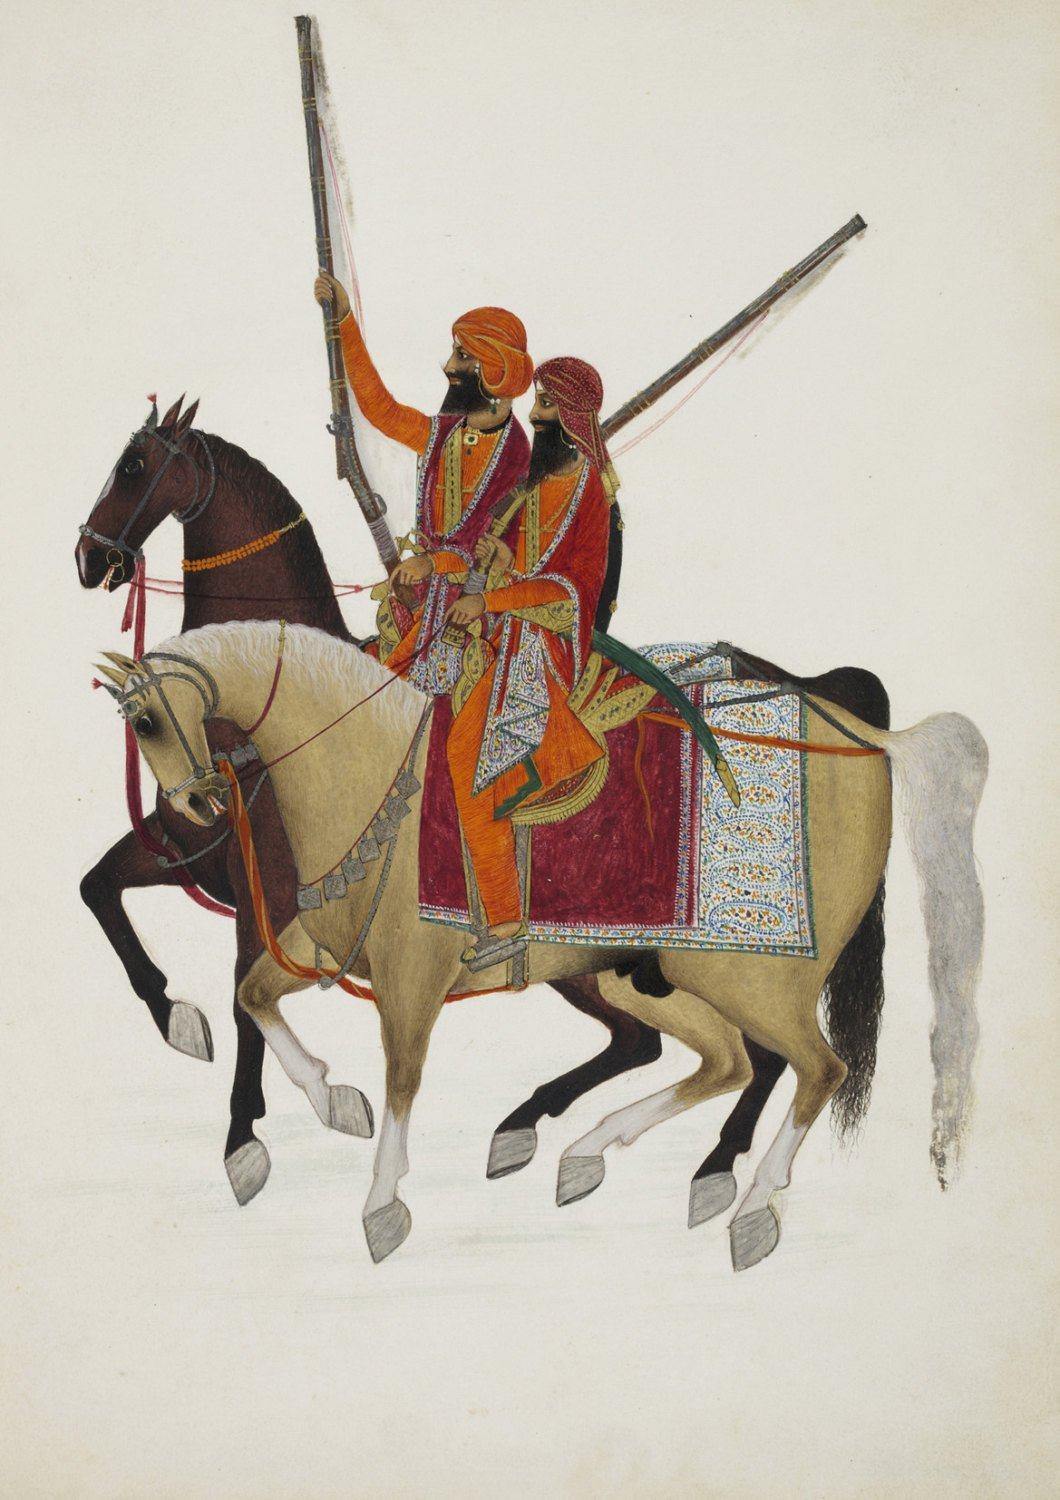 CAVALRY HORSE PRINT: Asian Art Illustration - Pimlico Prints